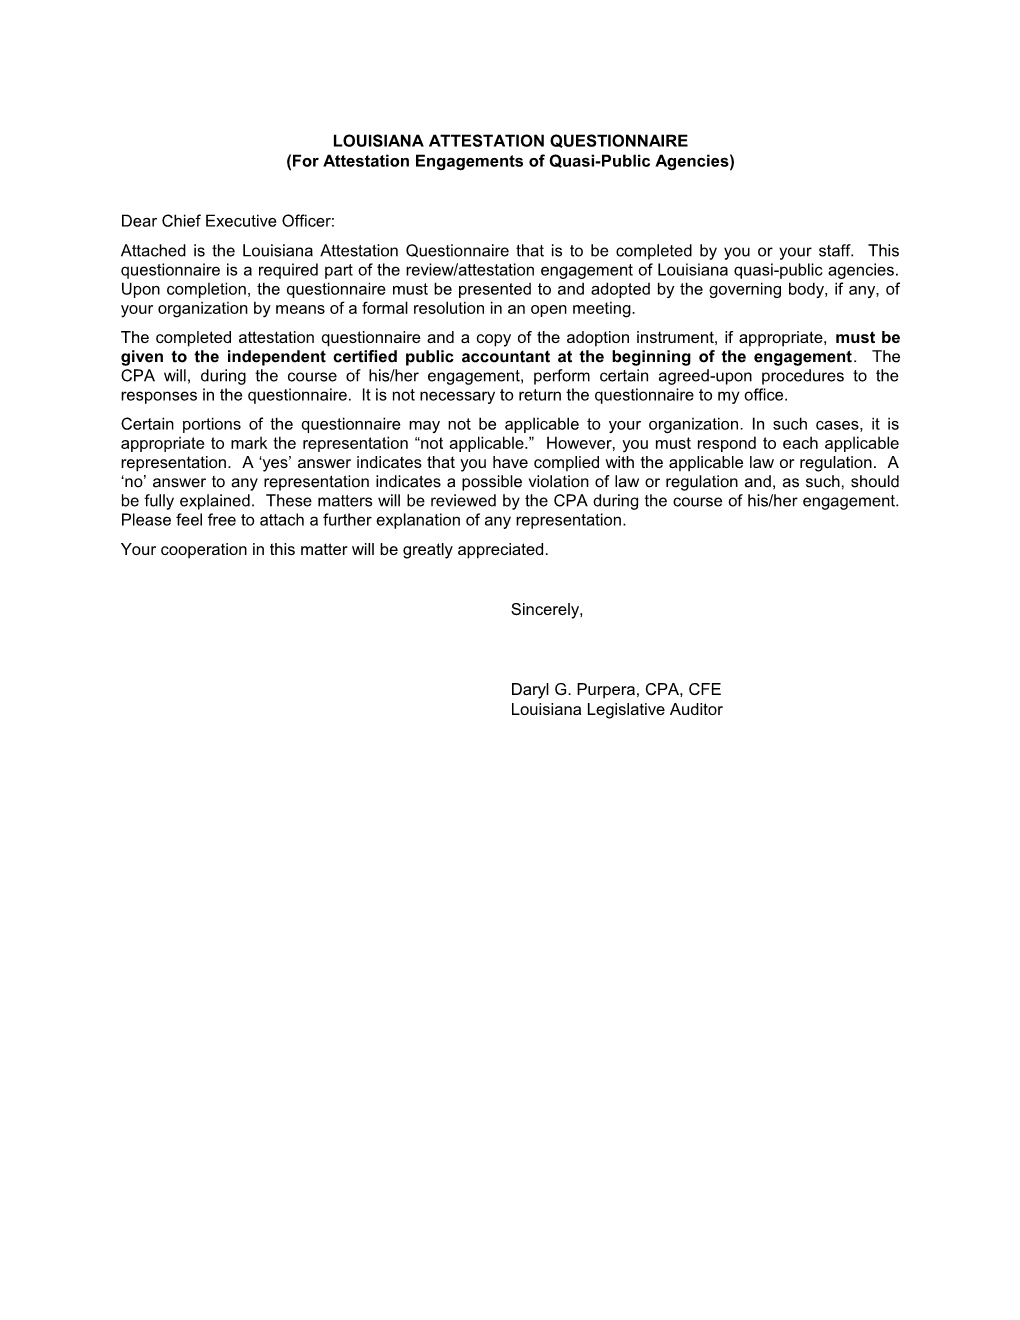 LOUISIANA ATTESTATION QUESTIONNAIRE (For Attestation Engagements of Quasi-Public Agencies)